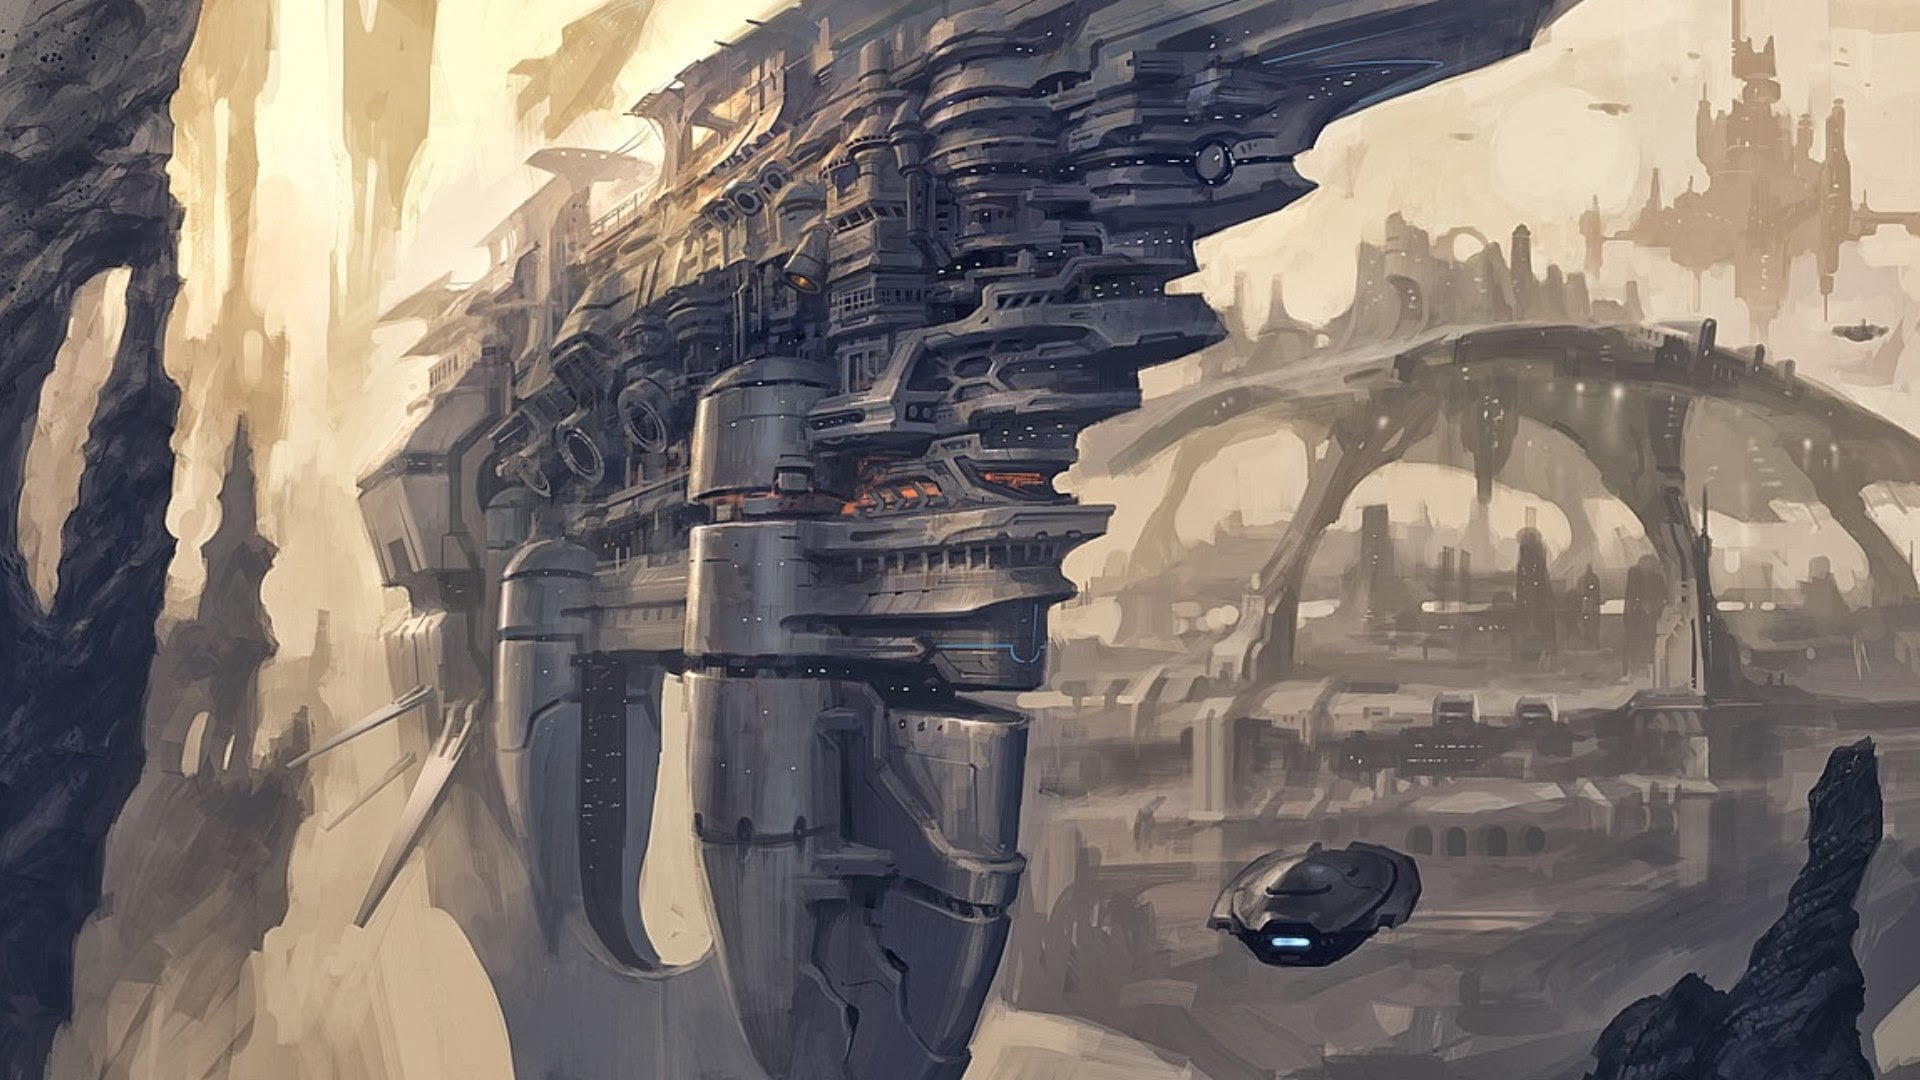 Spacecraft Wallpaper Science Fiction Futuristic Concept Art Images, Photos, Reviews